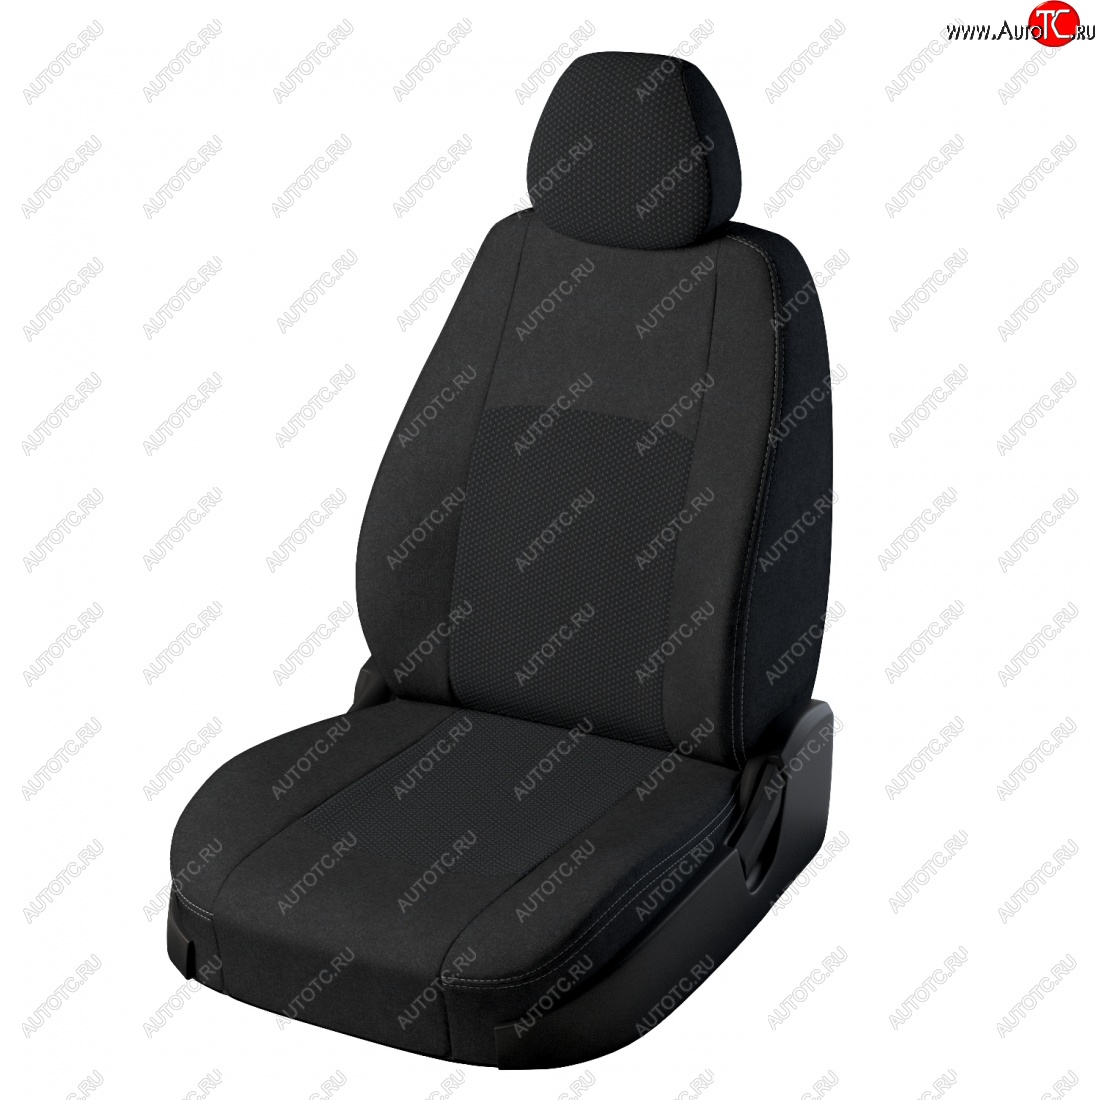 4 199 р. Чехлы для сидений Lord Autofashion Турин (жаккард)  Hyundai Sonata  EF (2001-2013) (Чёрный, вставка Эльбрус)